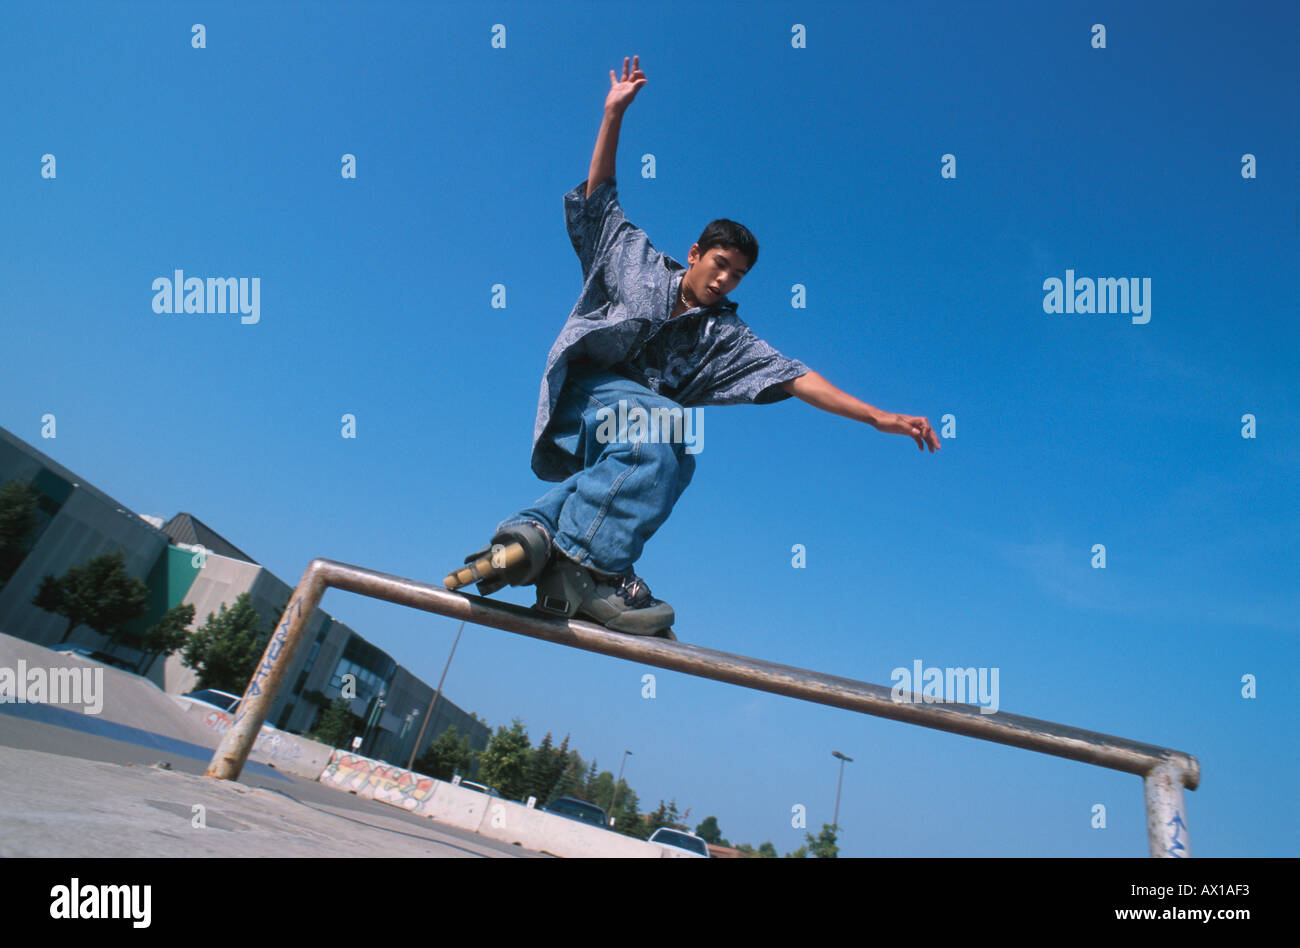 Junge mit Roller-Skates 0001 Stockfoto